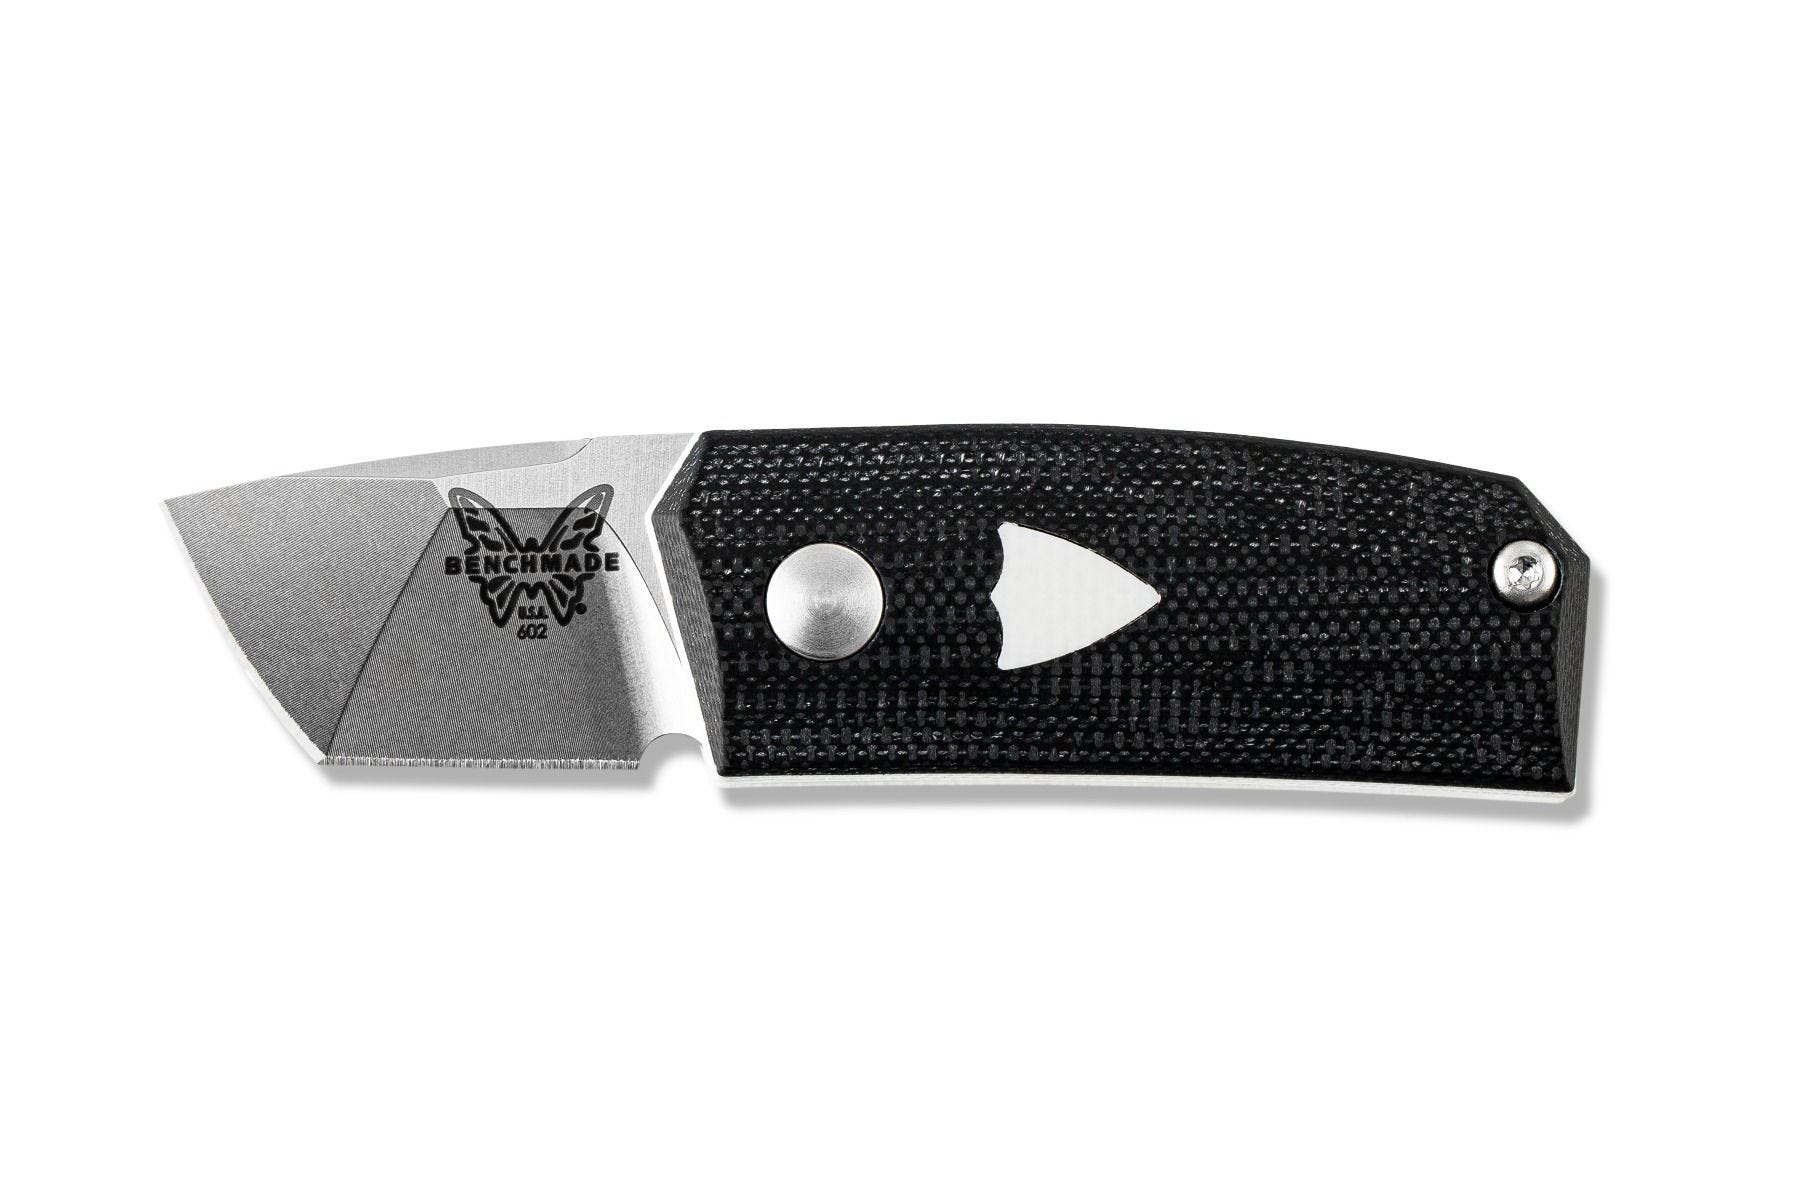 Testor 281202 Disposable Hobby Knife, Black – Toolbox Supply